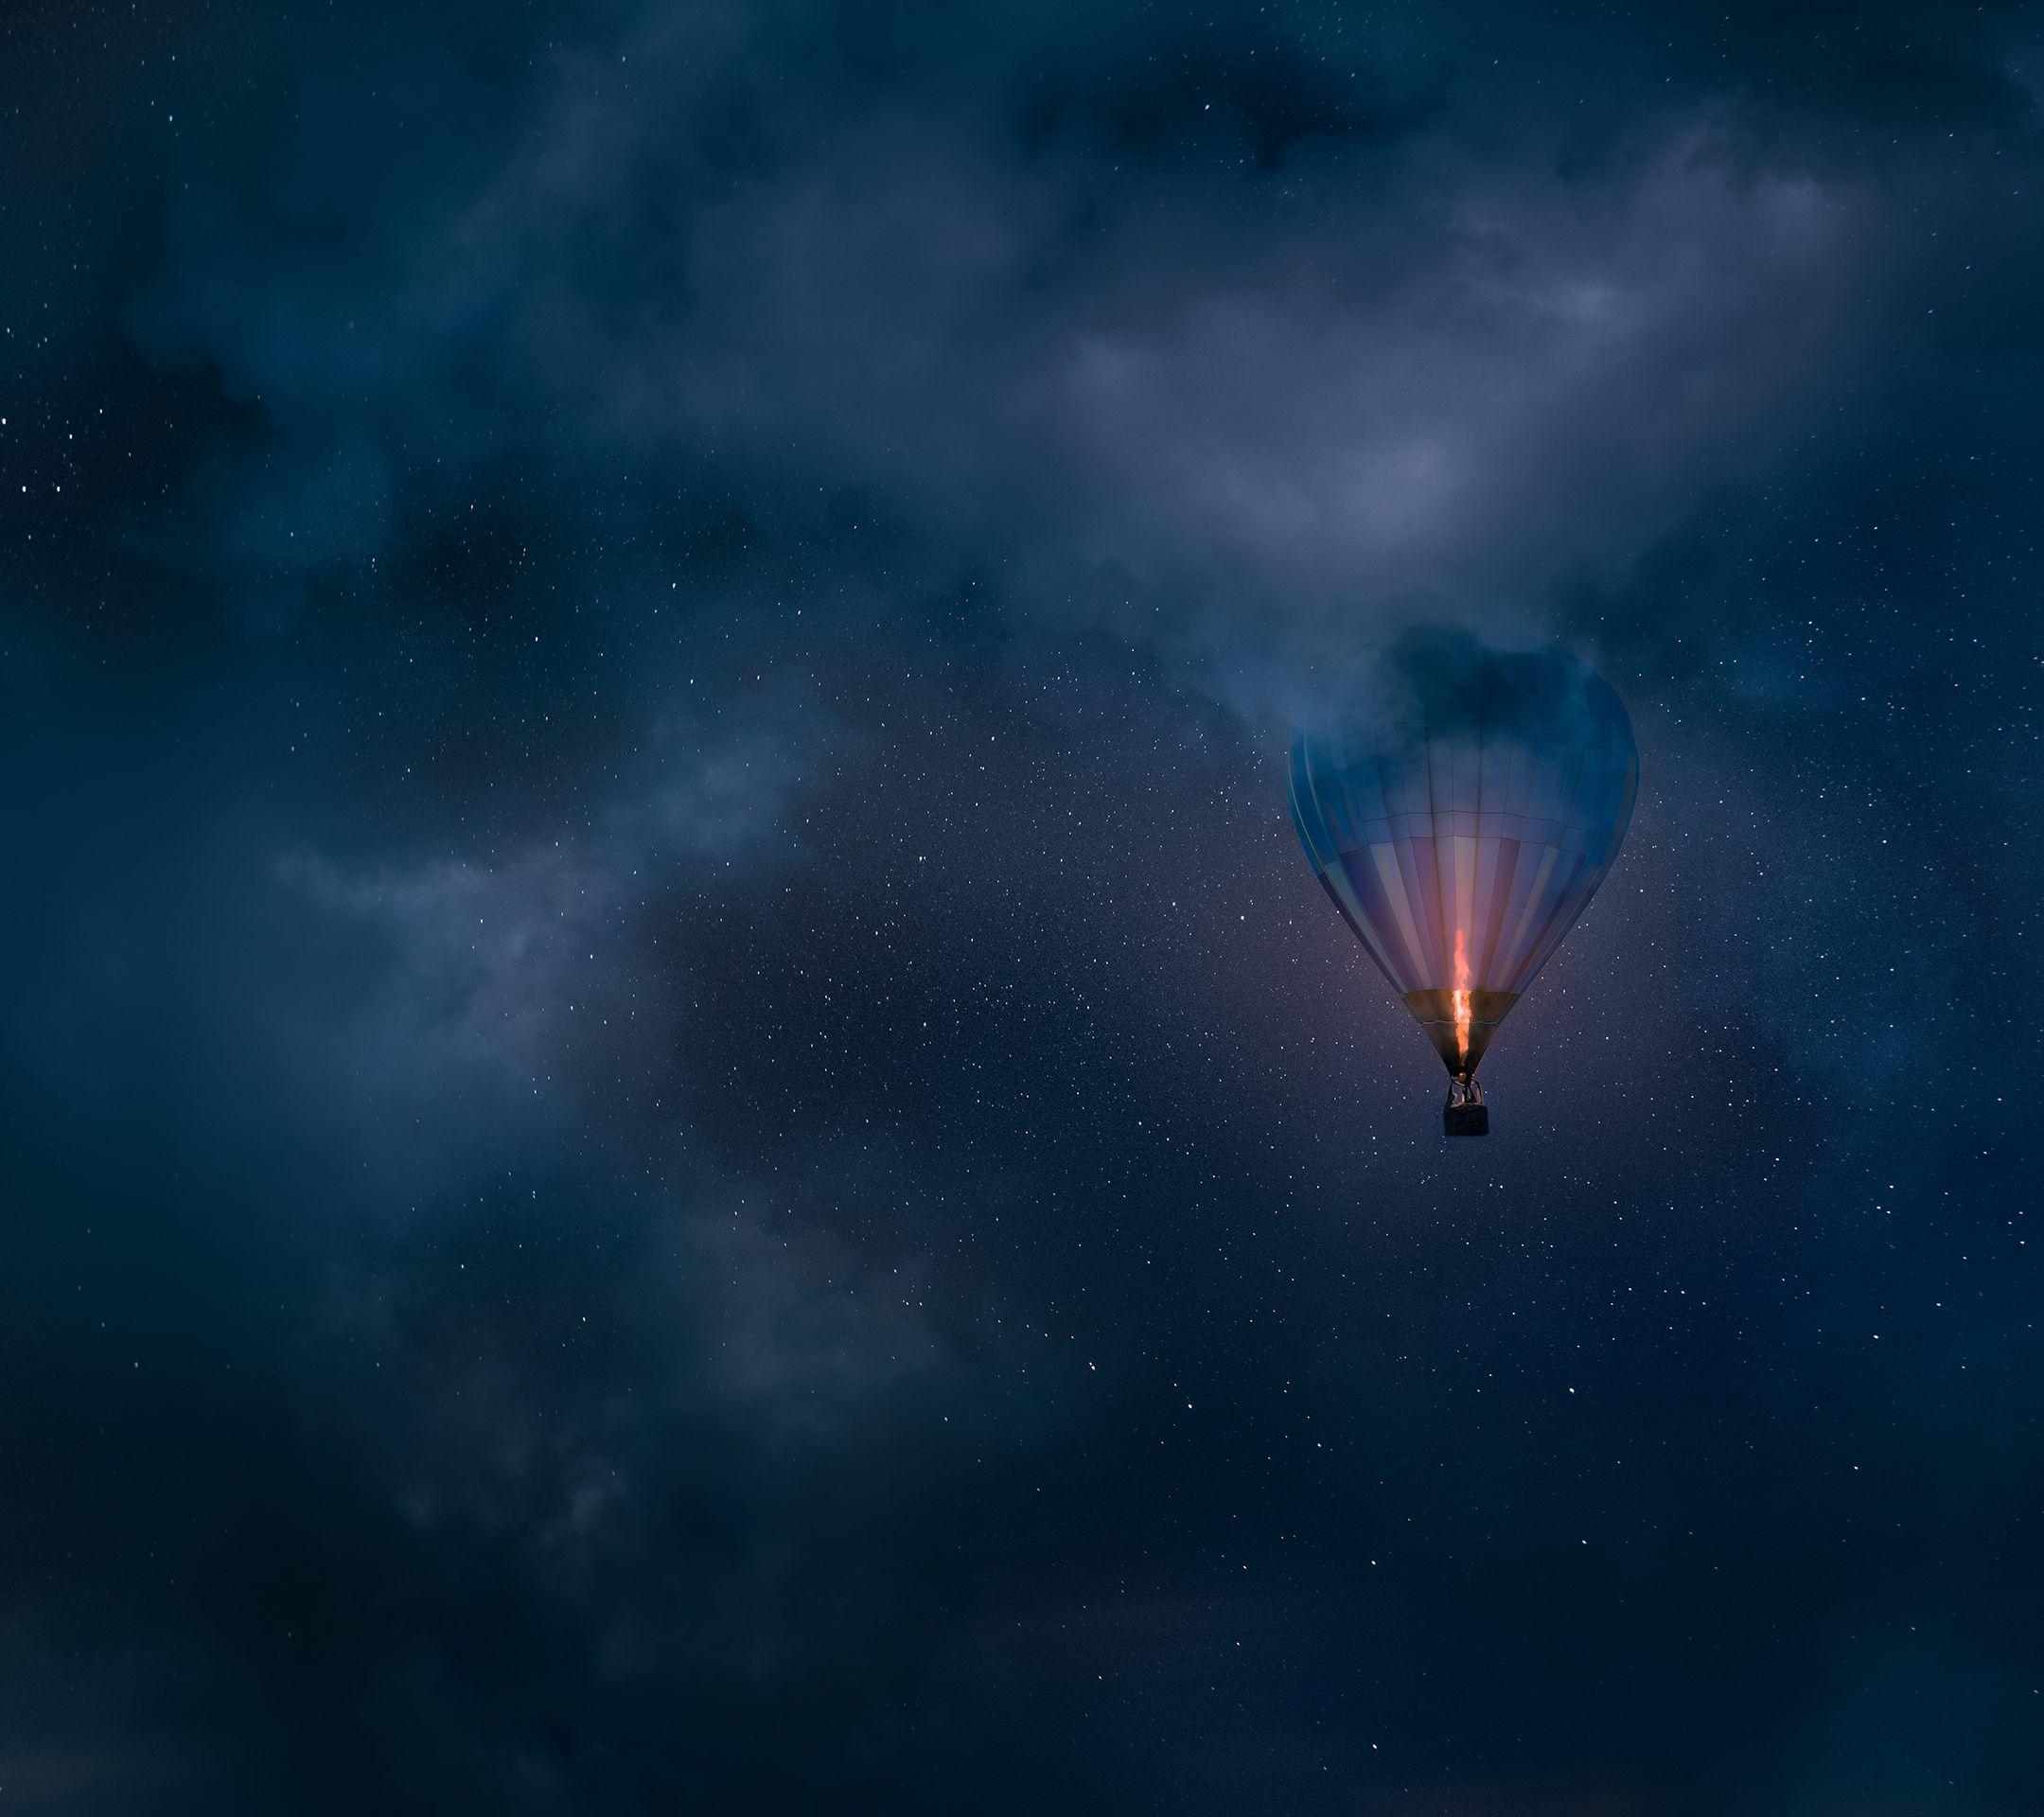 wallpaper nokia android,sky,hot air ballooning,hot air balloon,atmosphere,blue